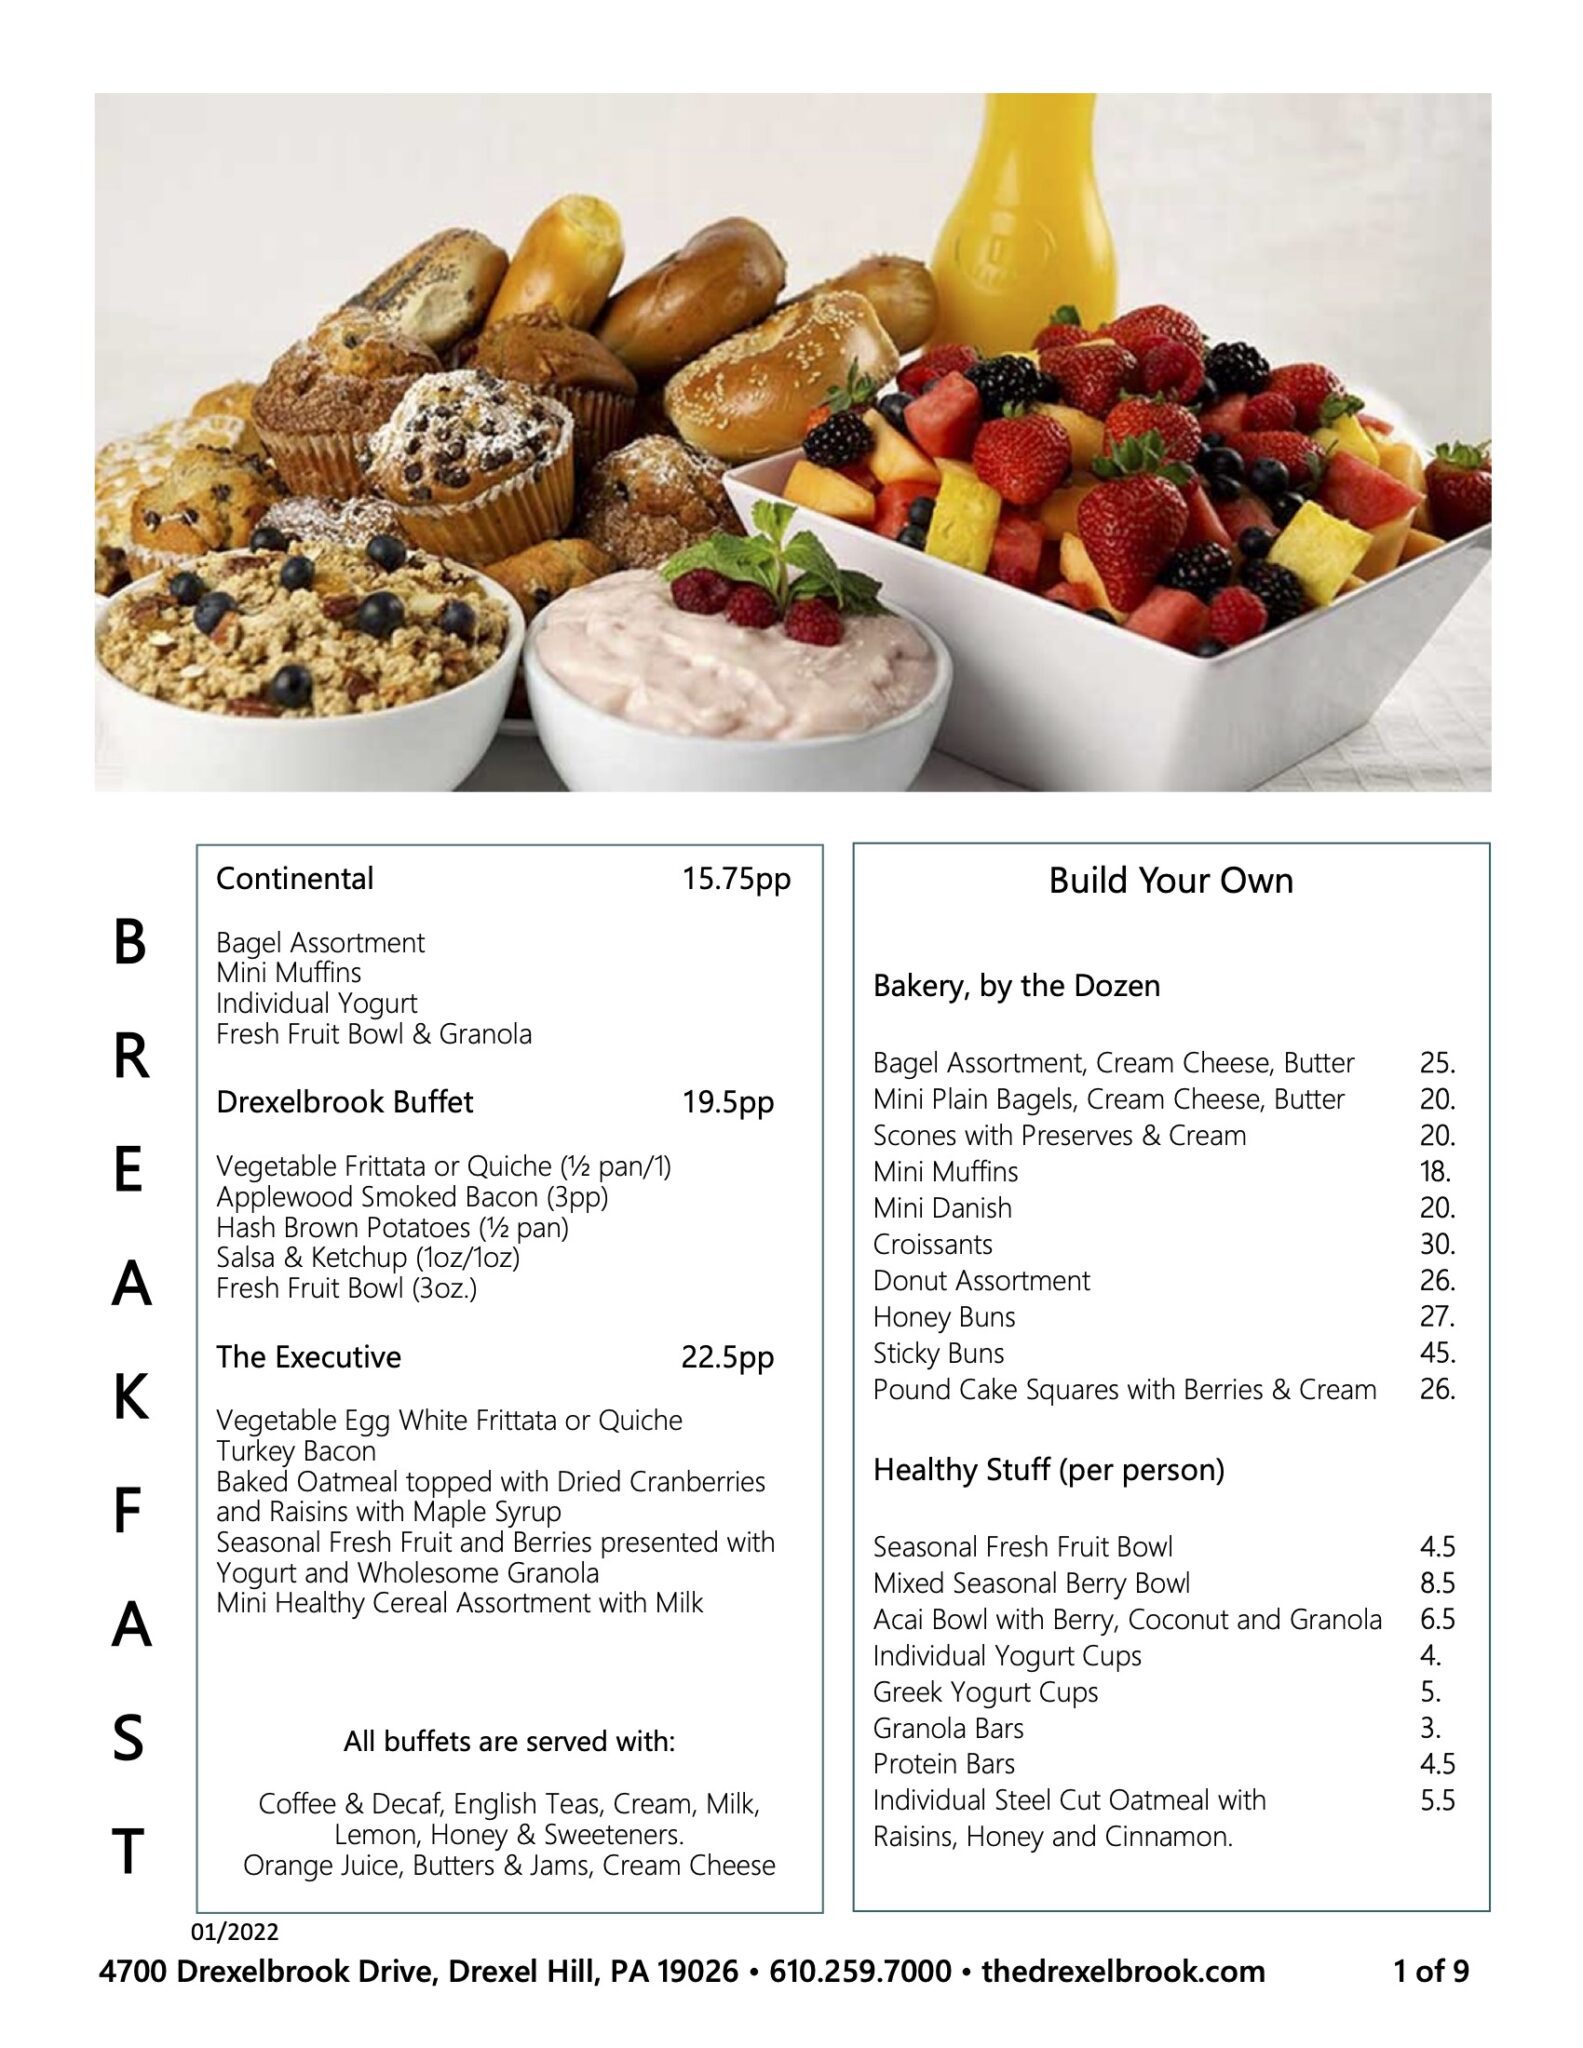 Drexelbrook breakfast options